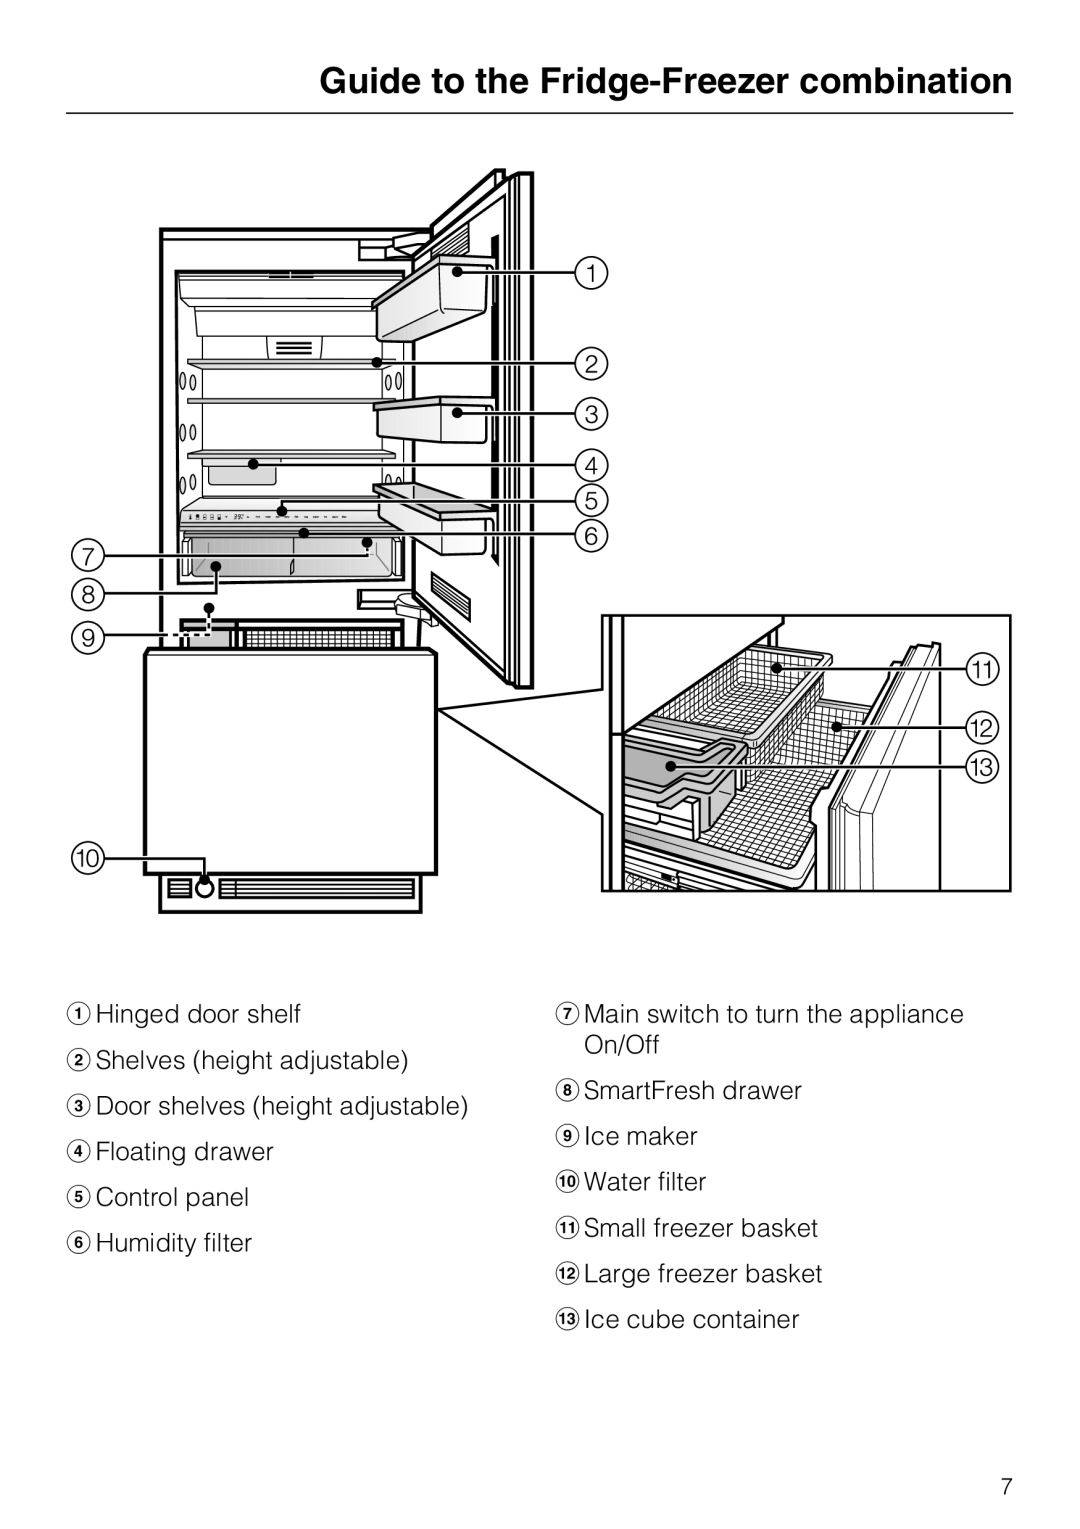 Miele KF 1811 Vi Guide to the Fridge-Freezer combination, Hinged door shelf Shelves height adjustable, Humidity filter 